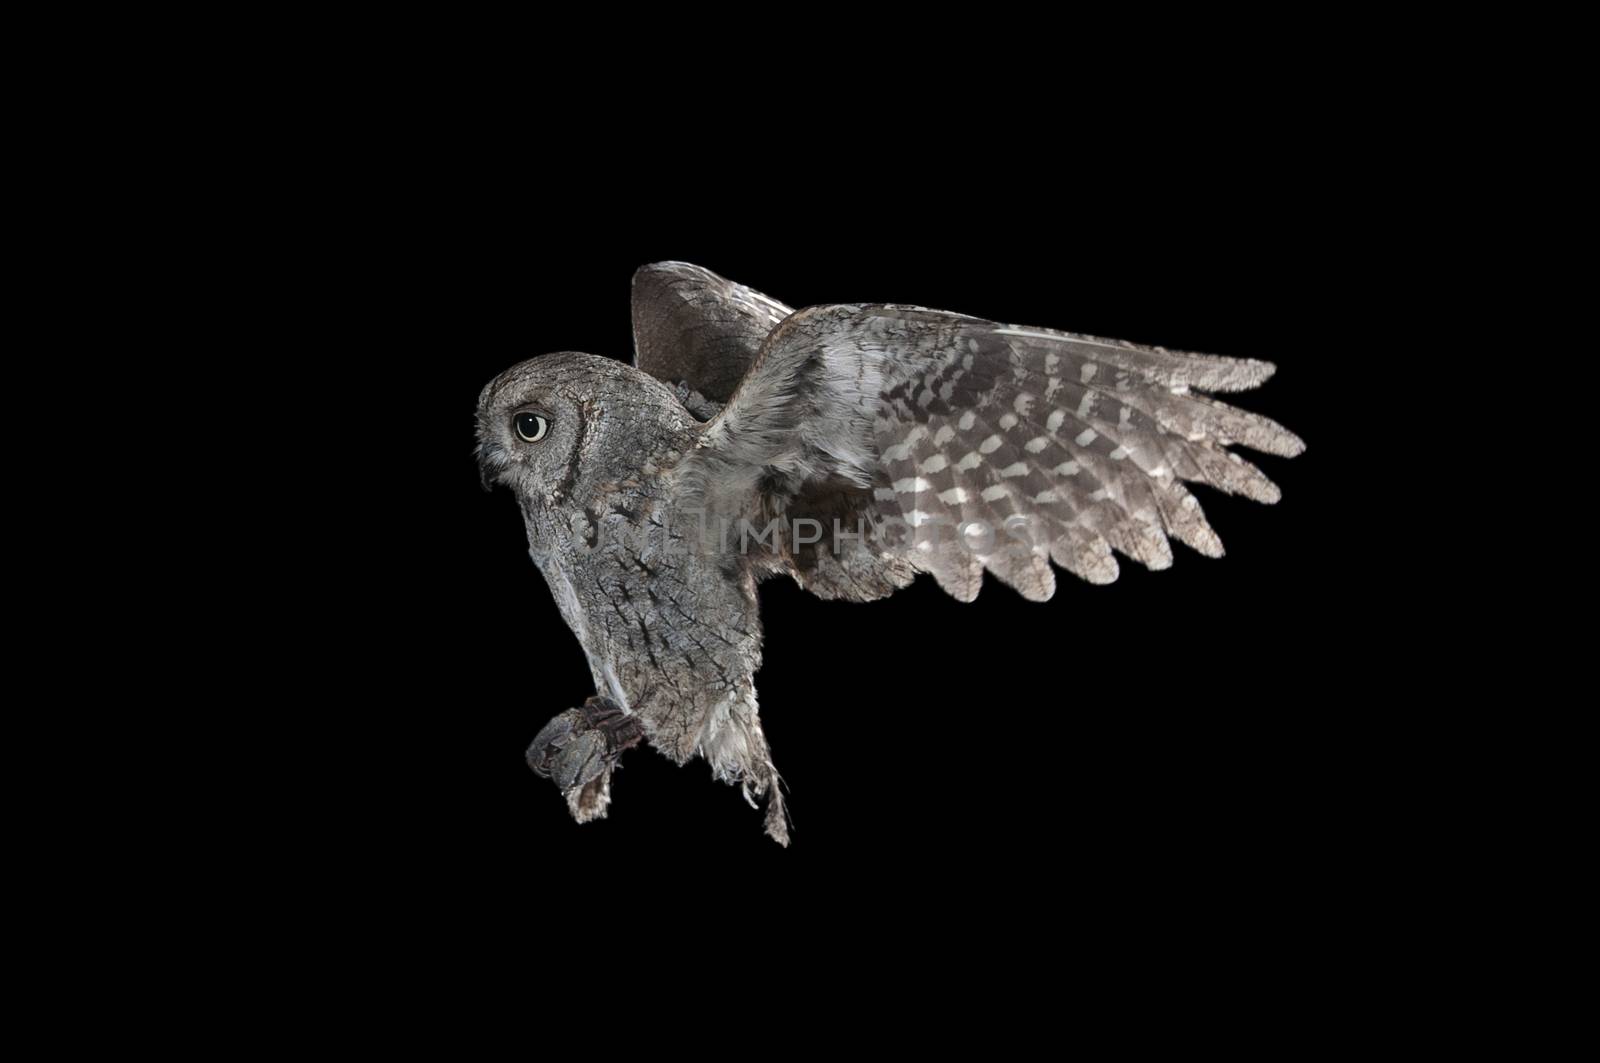 Eurasian scops owl (Otus scops), flying, high speed photography, by jalonsohu@gmail.com